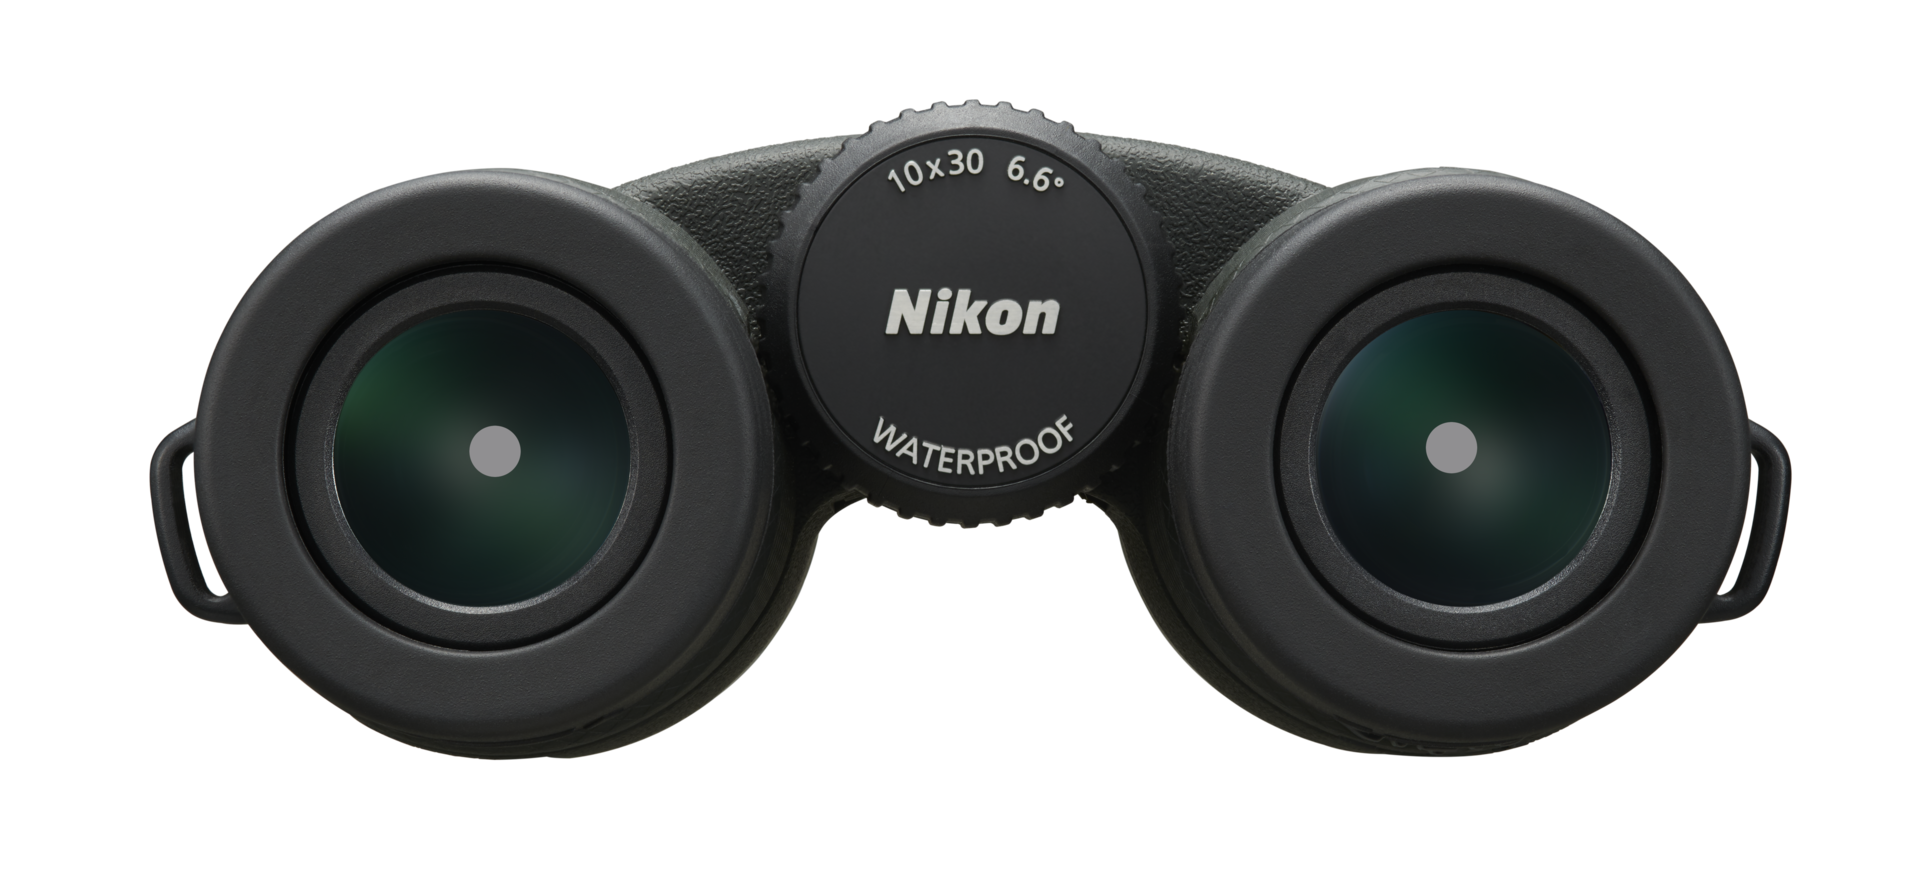 Nikon Prostaff P7 10x42 Binoculars